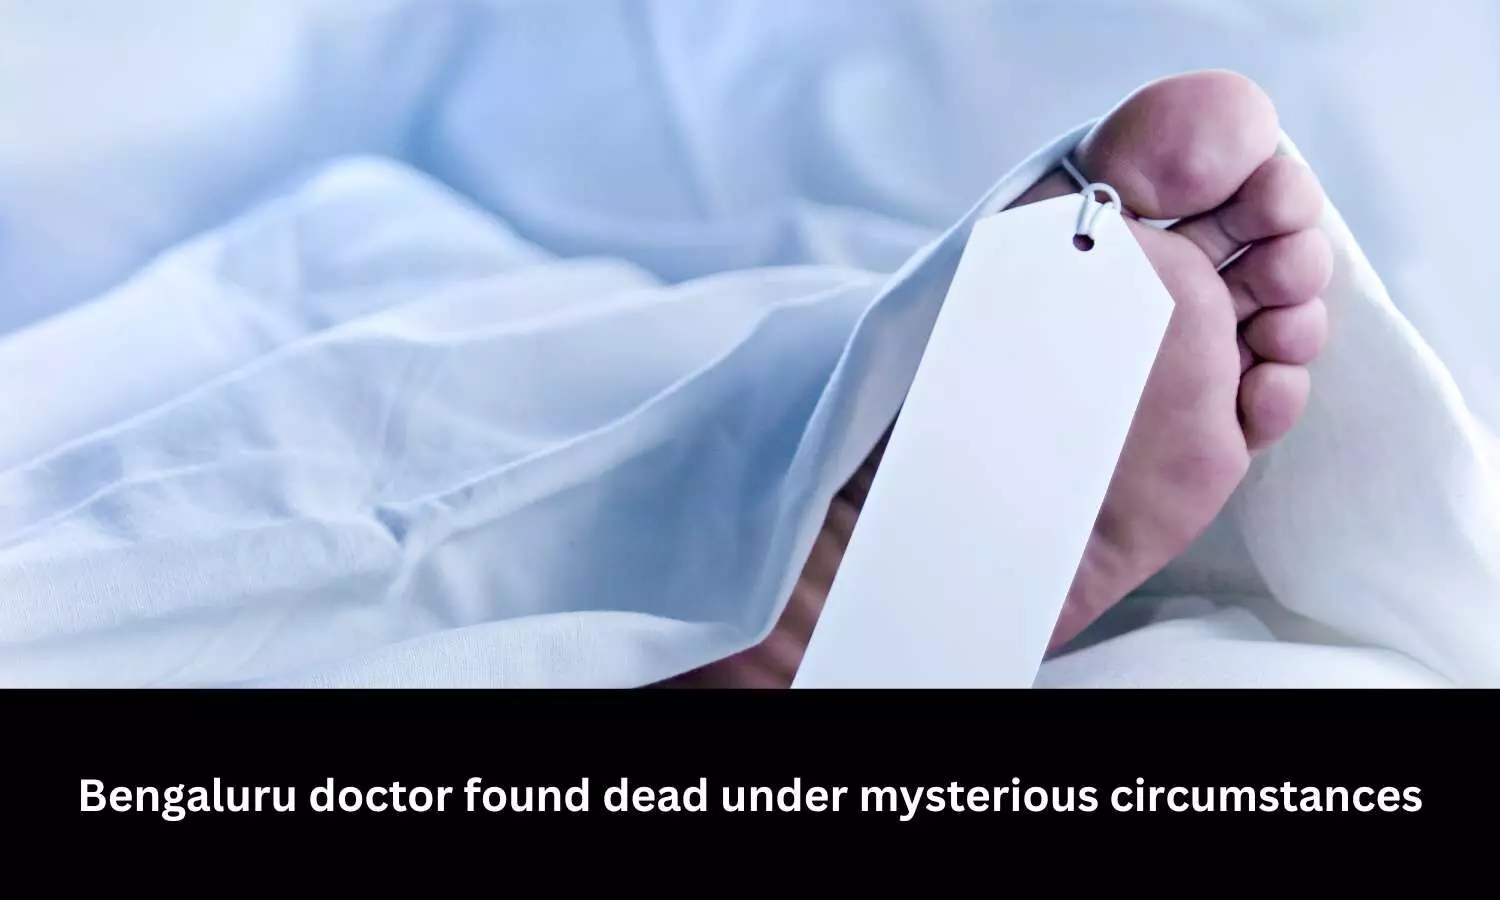 29-year-old trainee doctor found dead in Hospital washroom